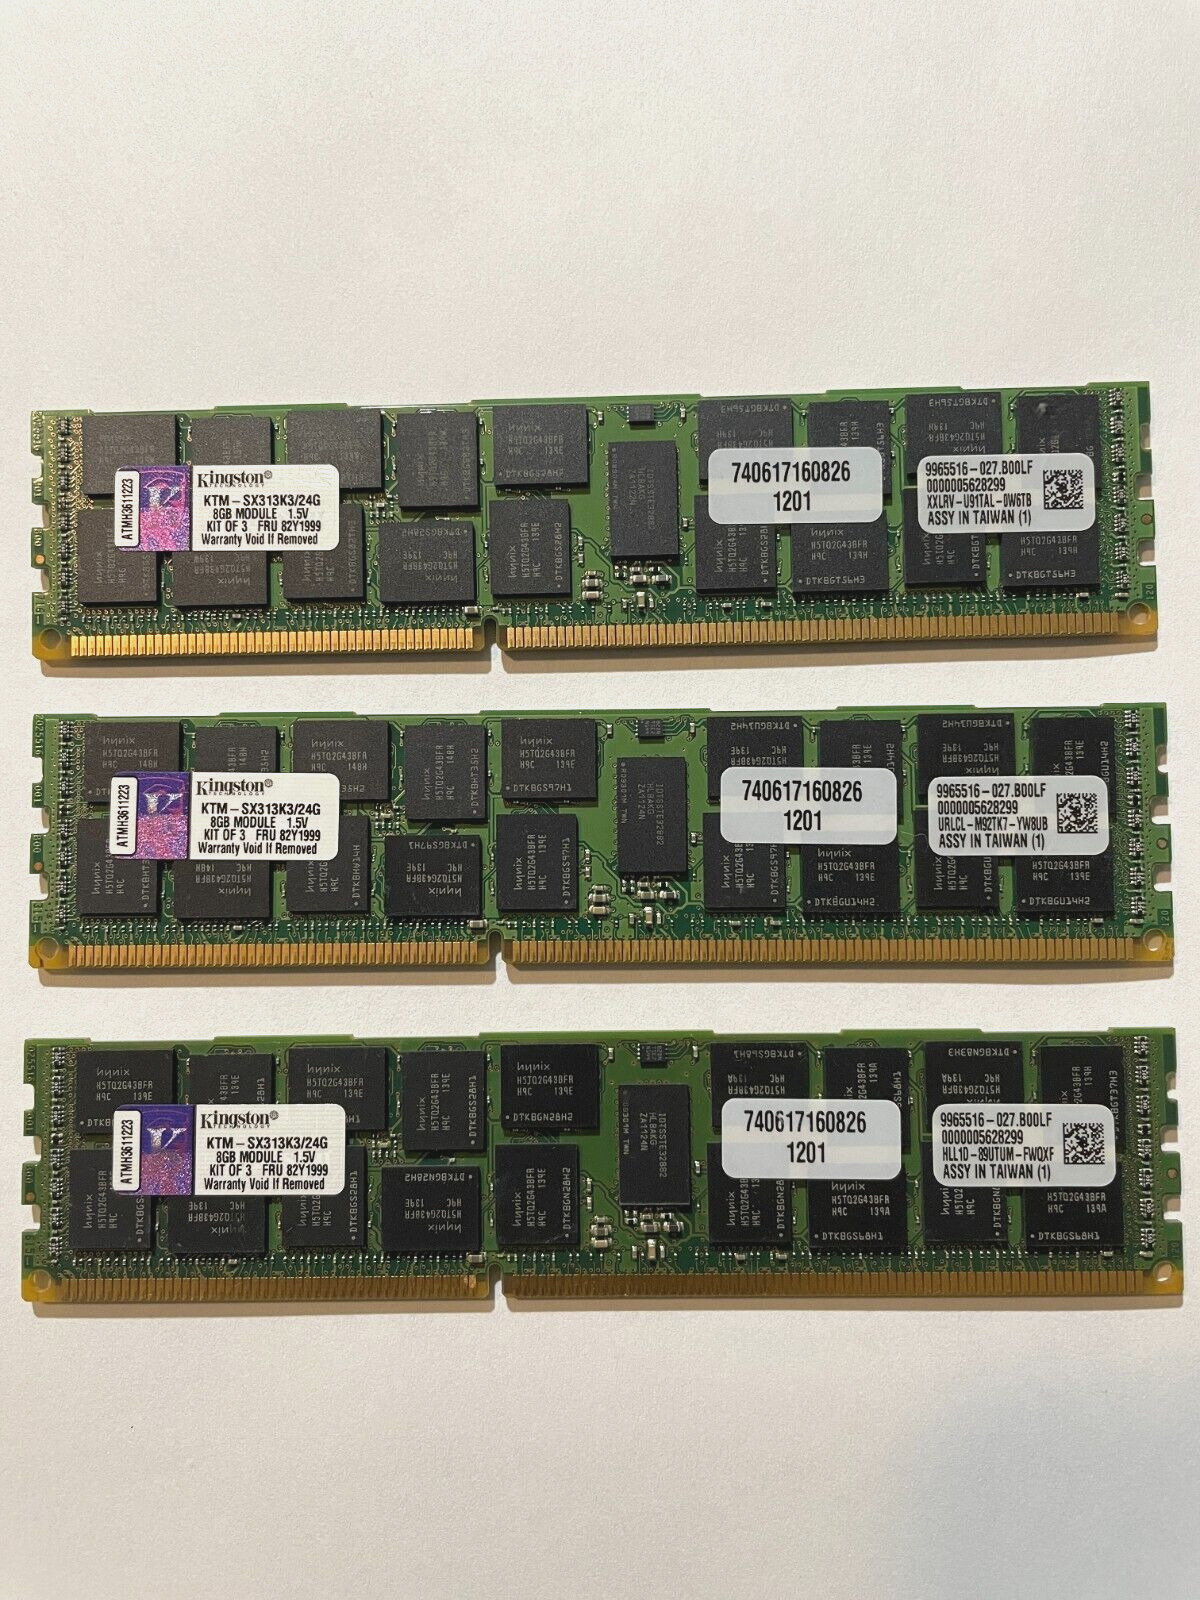 Kit of 3 - 8GB Kingston KTM-SX313K3/24G DDR3 Reg. ECC PC3-10600 1333Mhz Memory